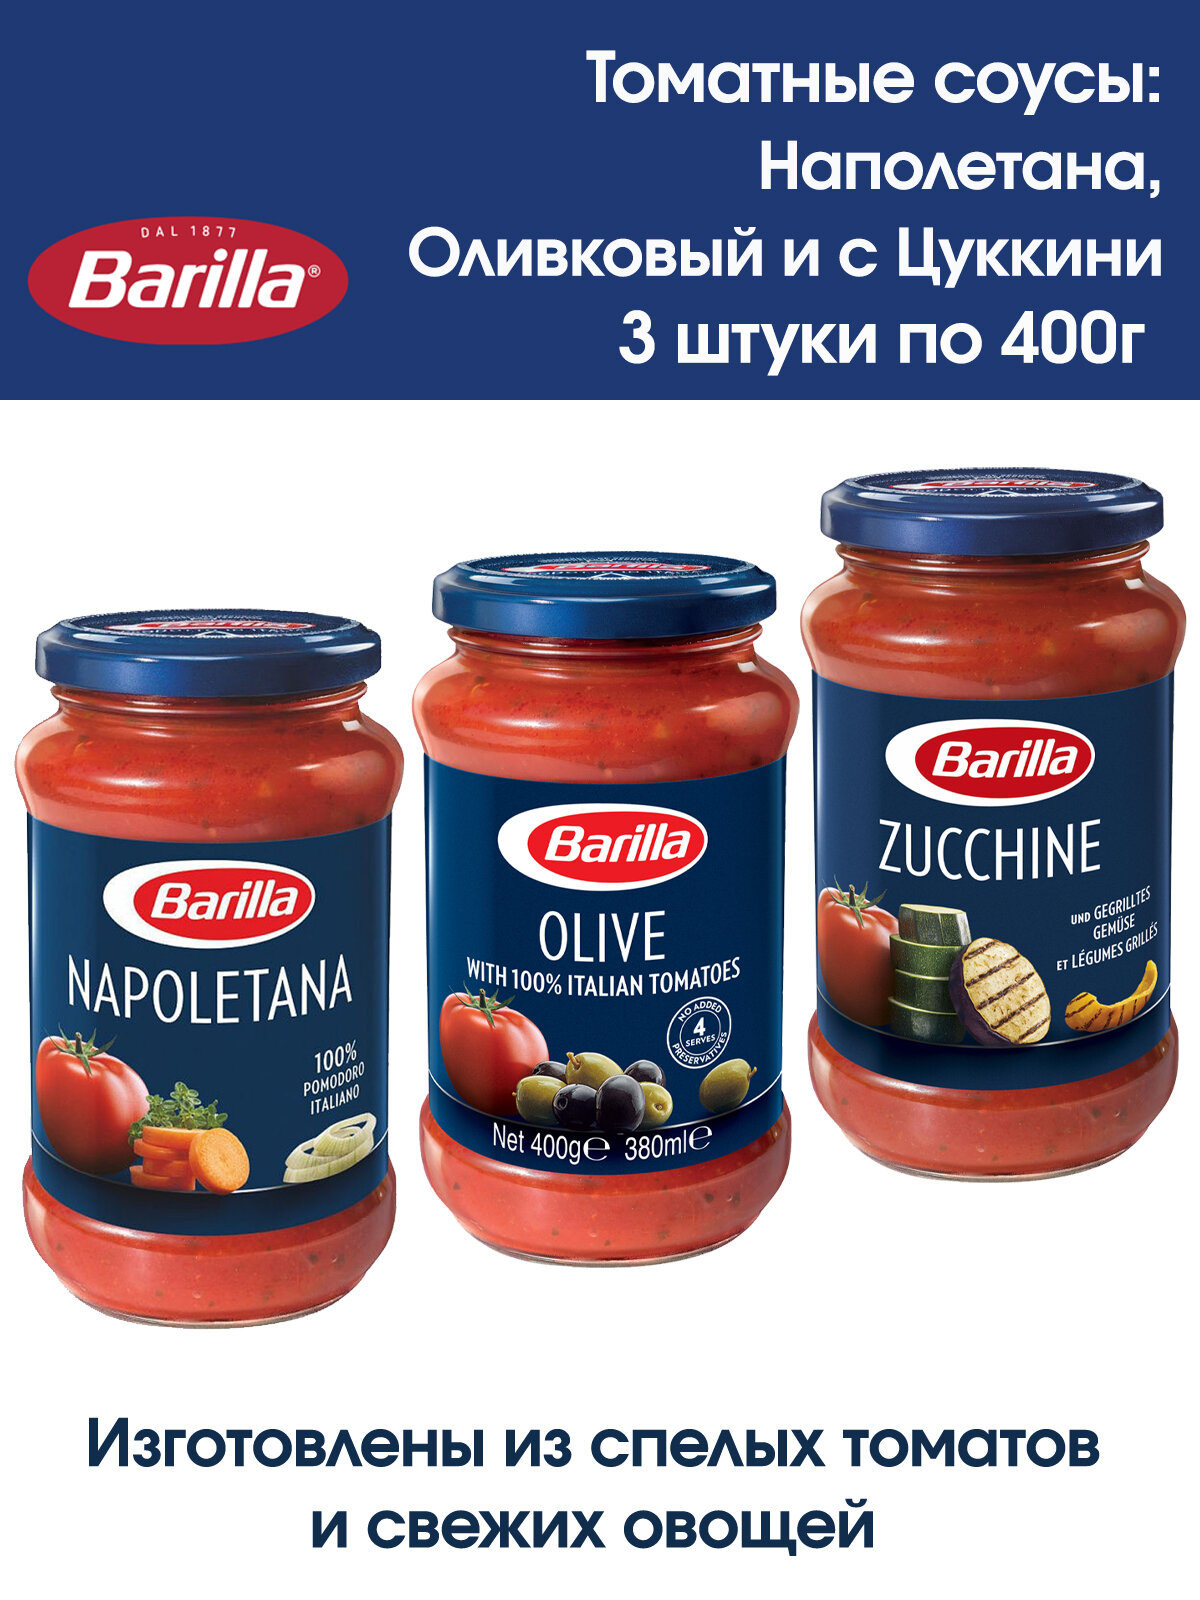 Соус Barilla: "NAPOLETANA", "Olive", "ZUCCHINE", 3 вида по 400 грамм.